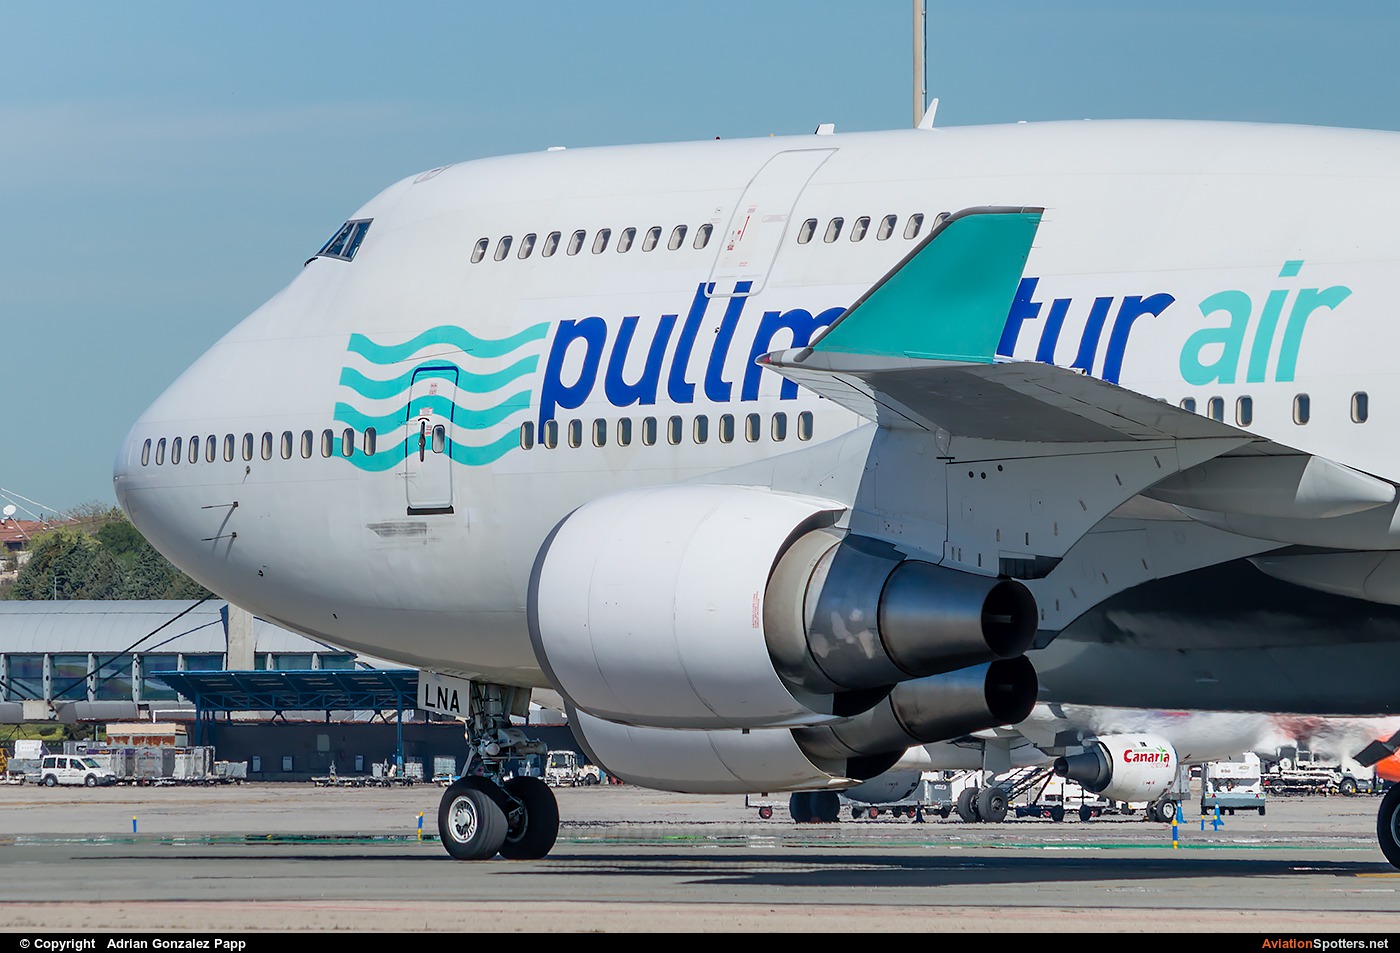 Air Pullmantur  -  747-400  (EC-LNA) By Adrian Gonzalez Papp (agp12)